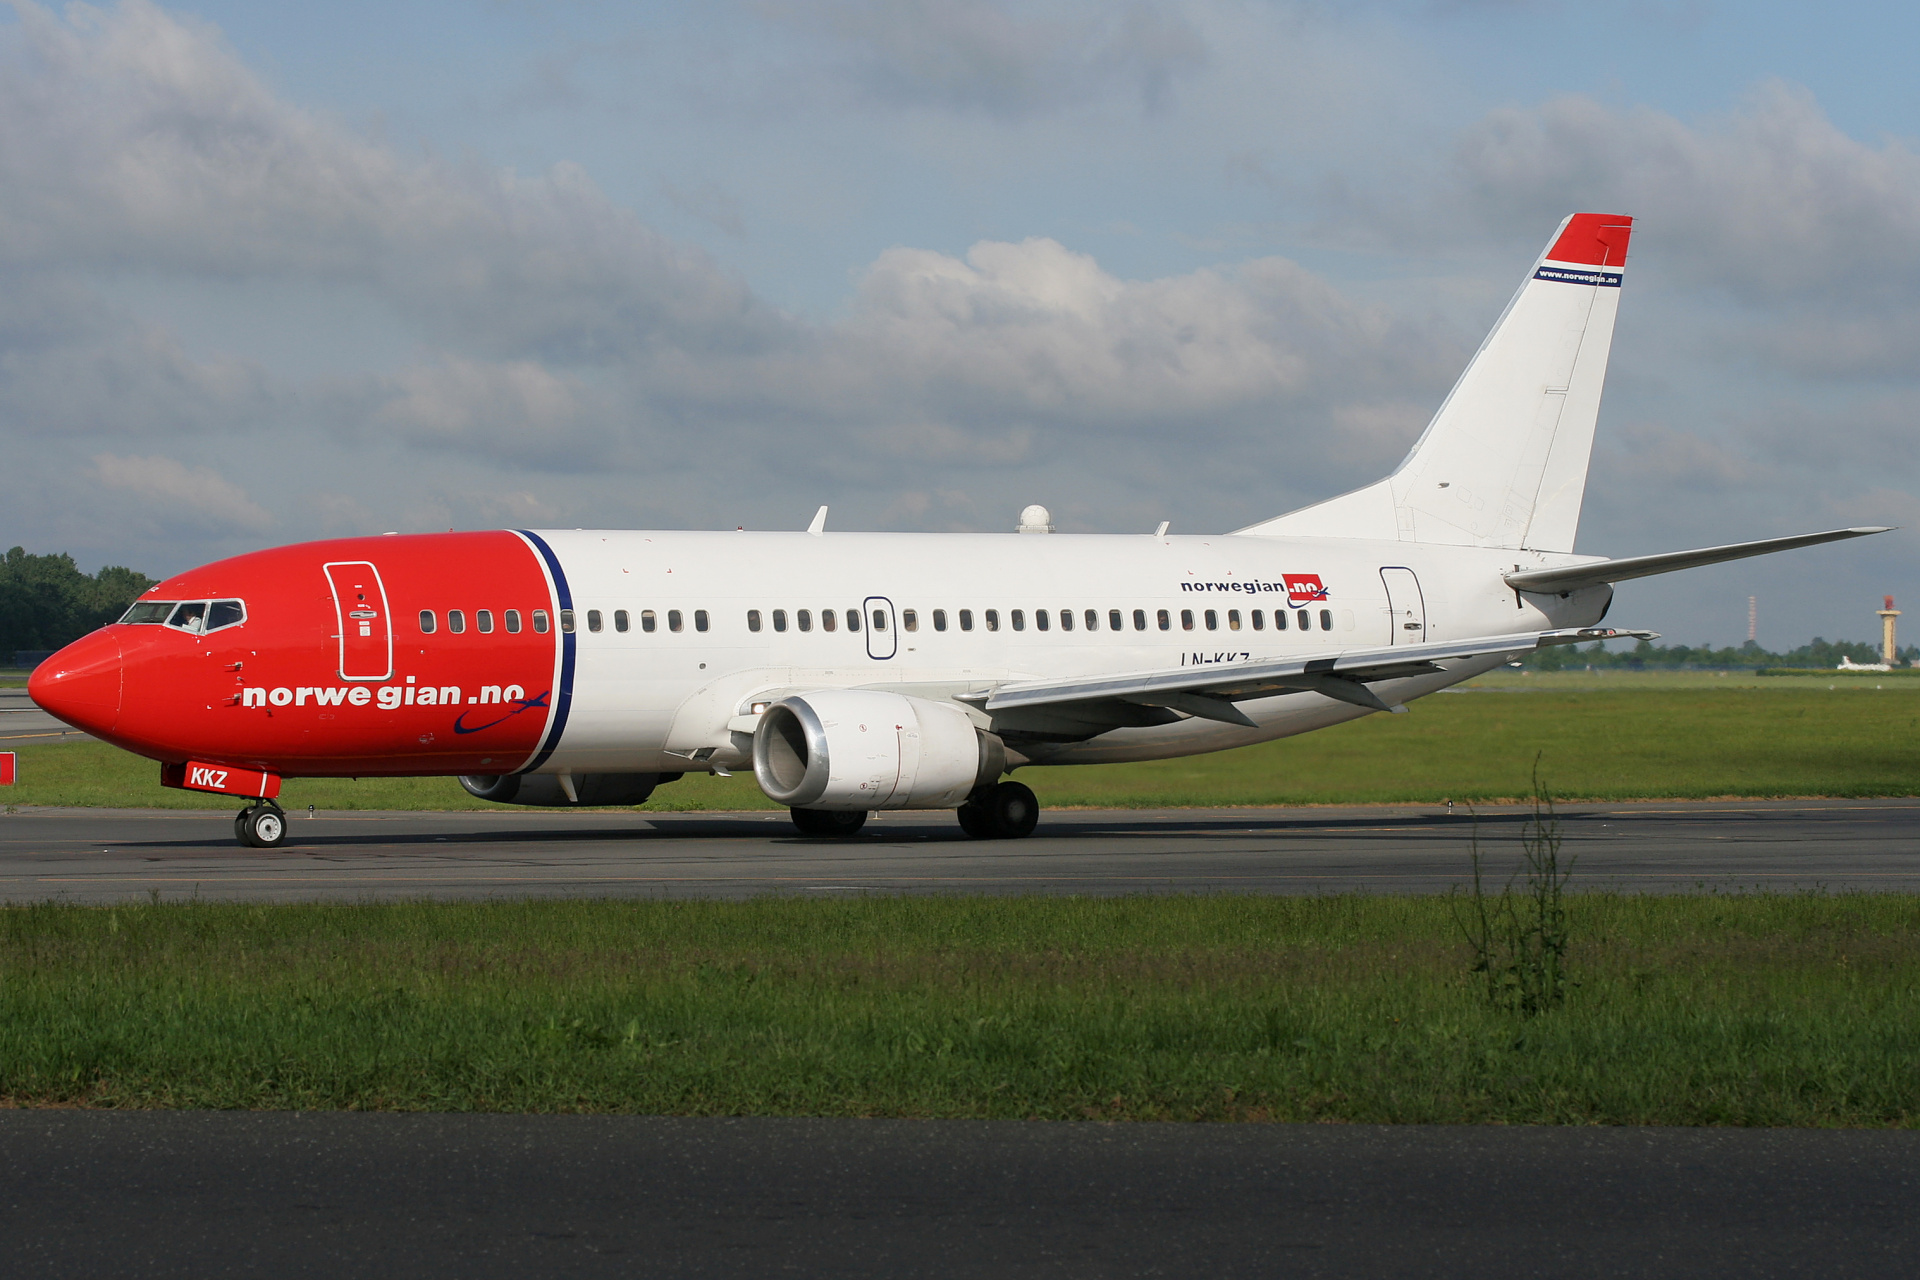 LN-KKZ (Aircraft » EPWA Spotting » Boeing 737-300 » Norwegian Air Shuttle)